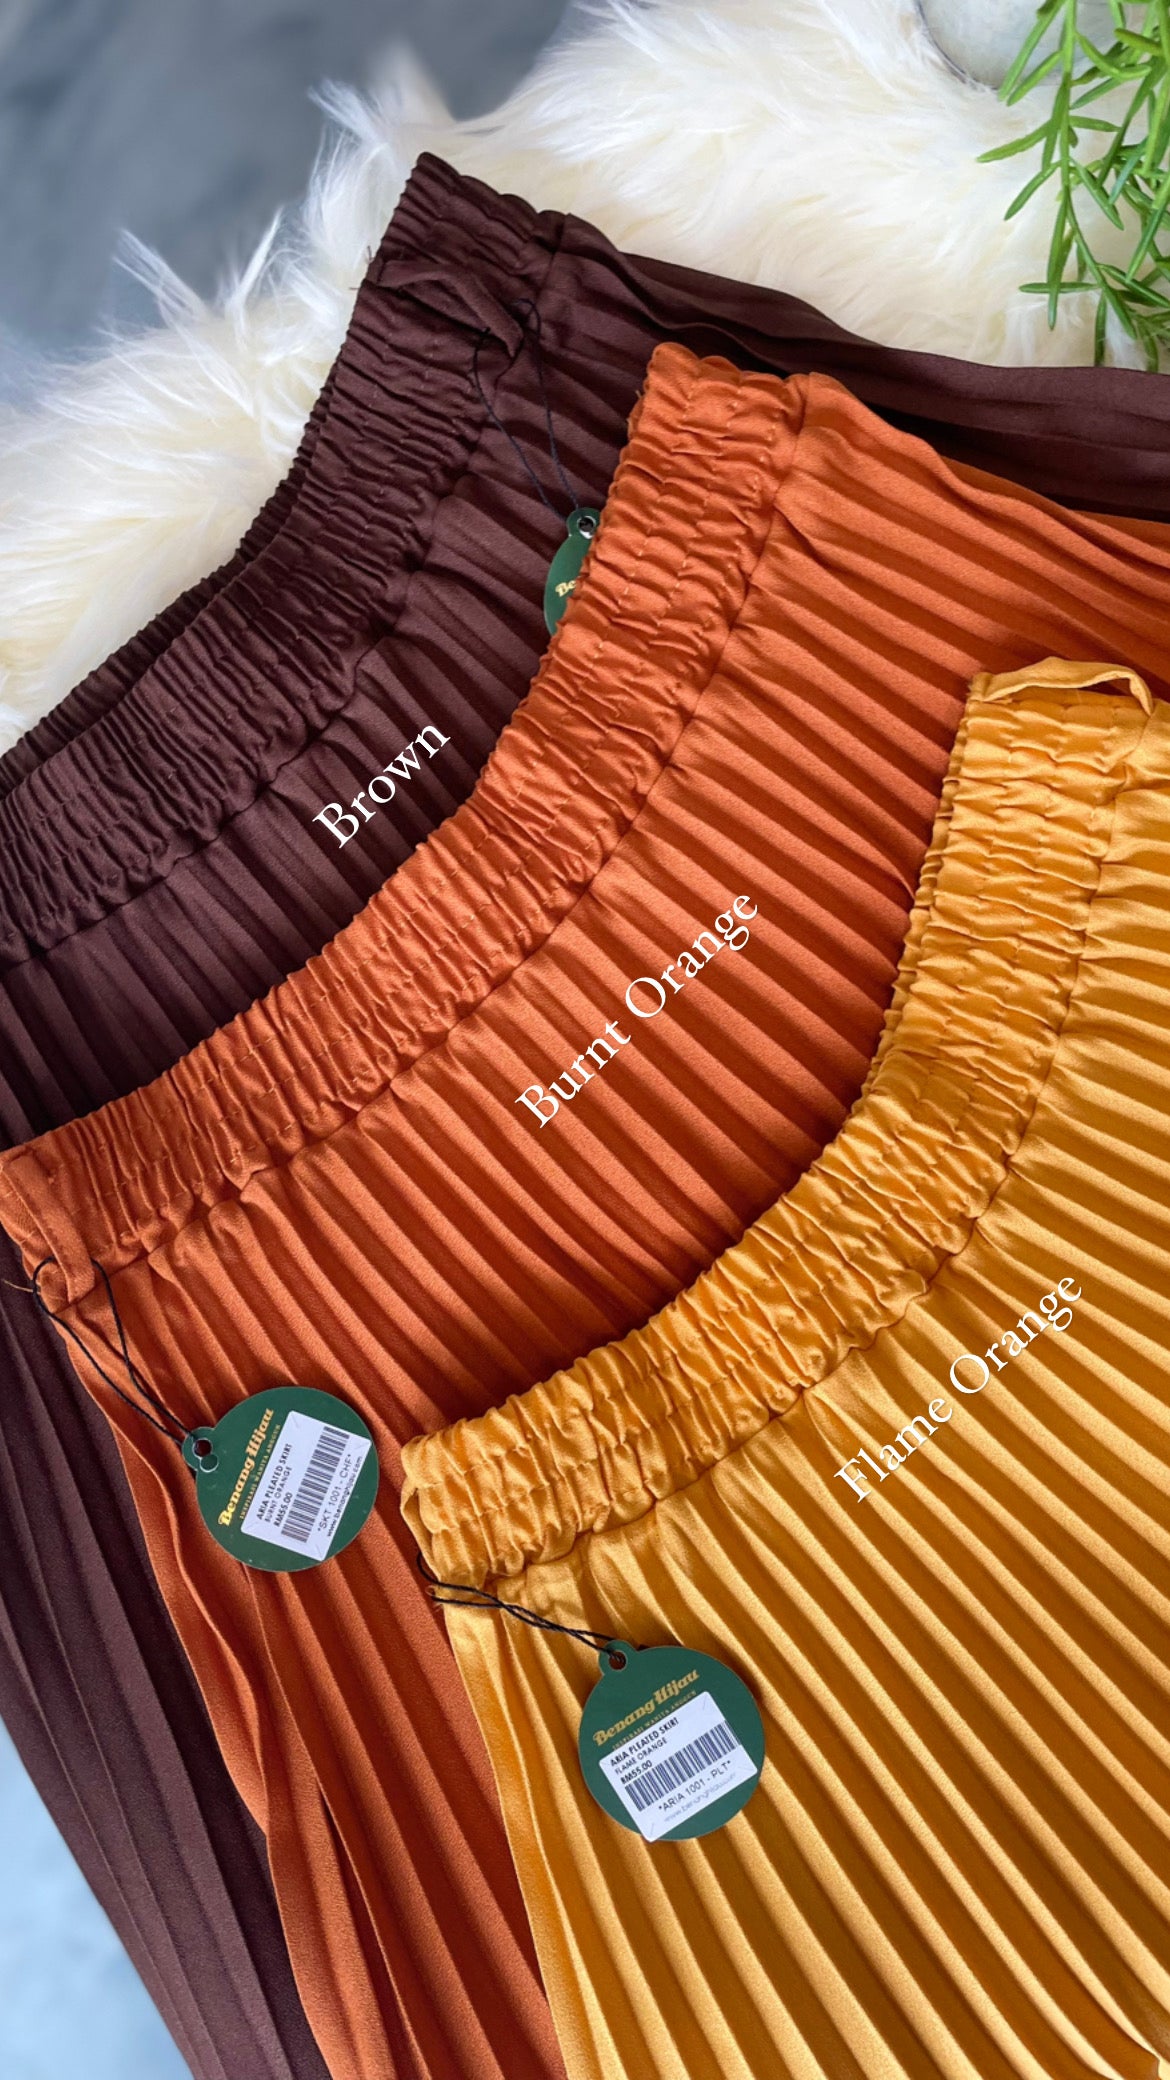 Aria Pleated Skirt - 12 Flame Orange